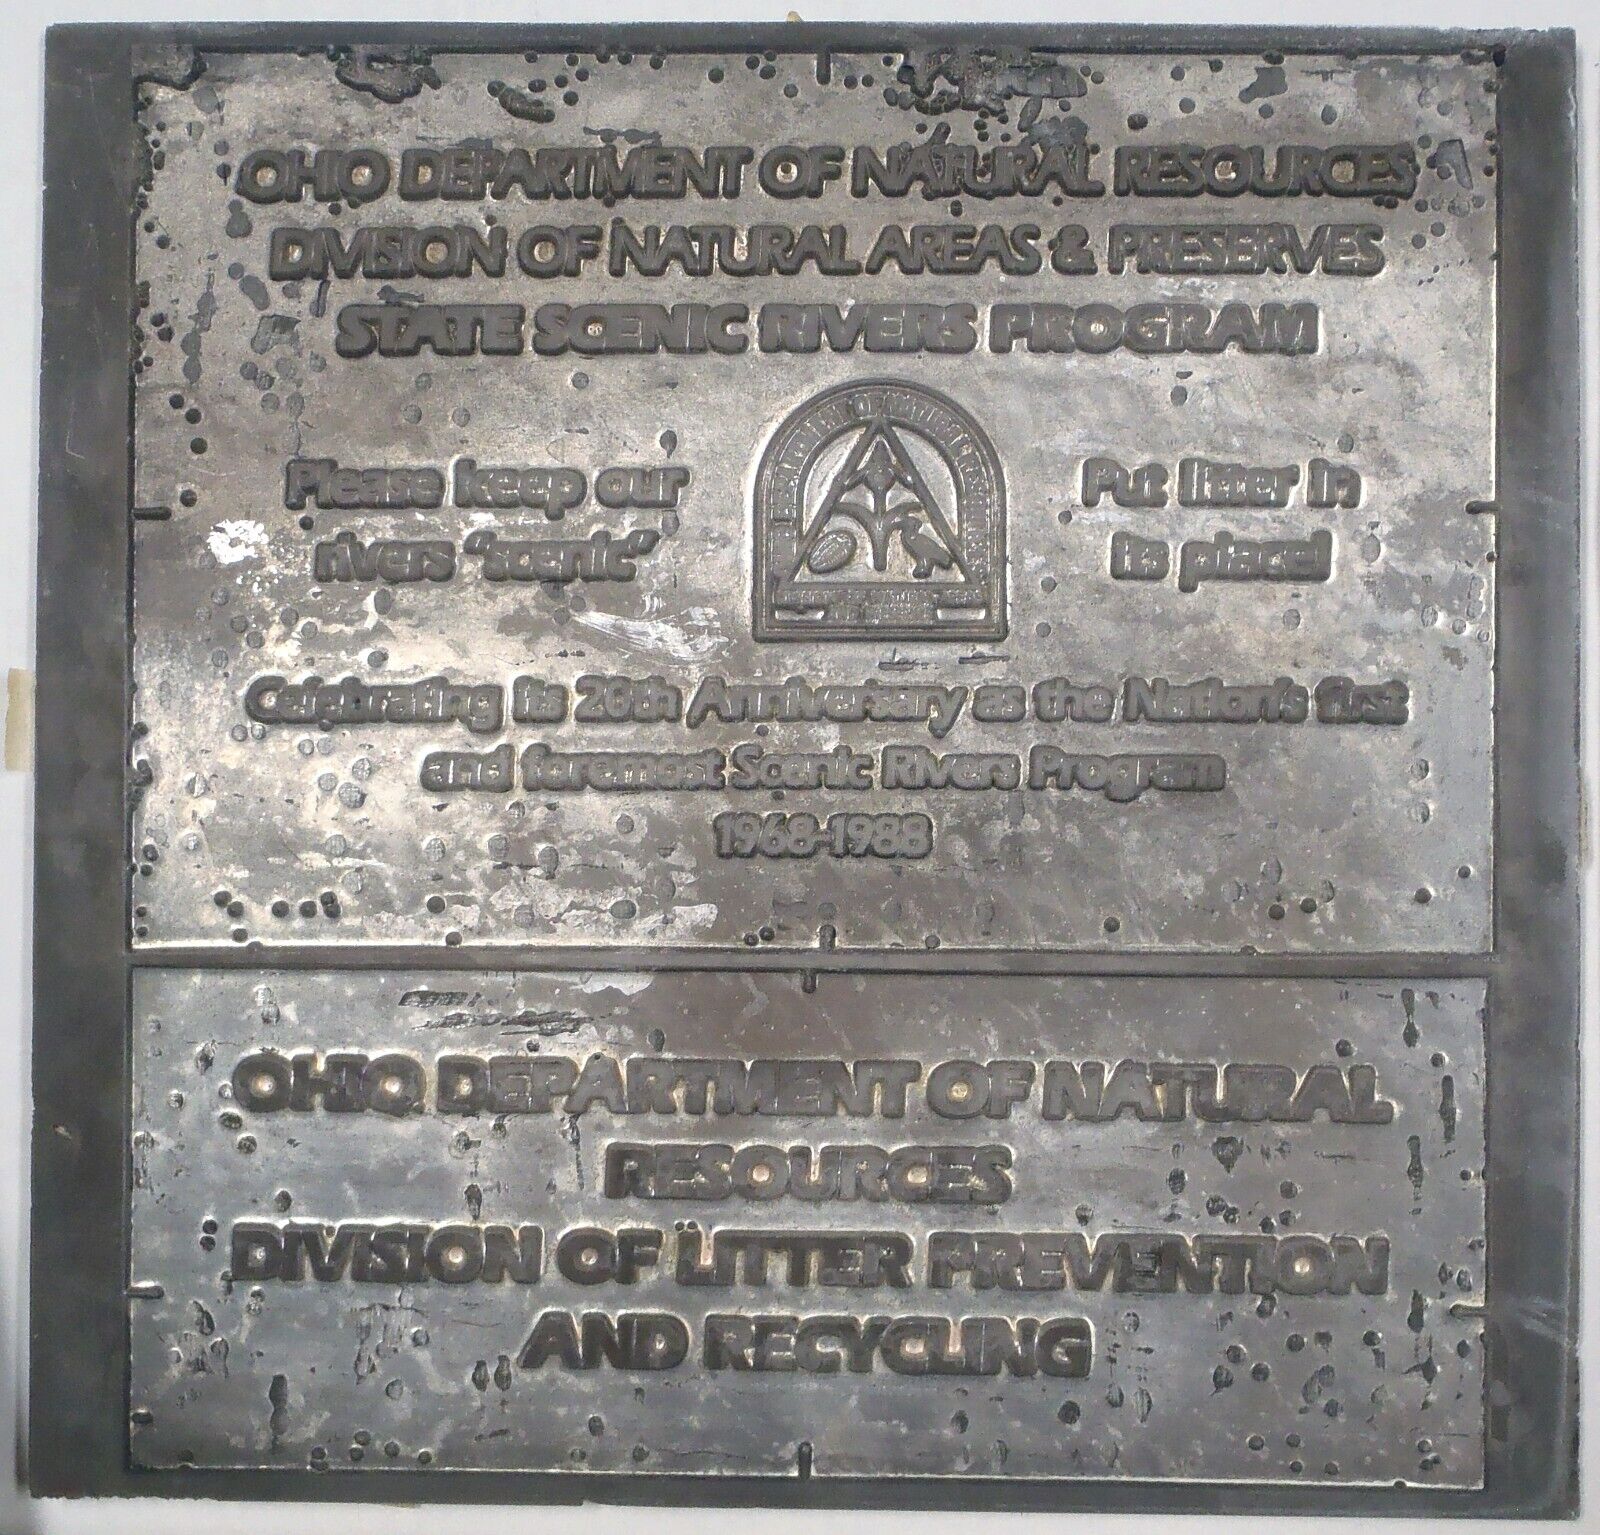 1988 Ohio Dnr Scenic River Program 26th Anniversary Litter Bag Lithography Plate